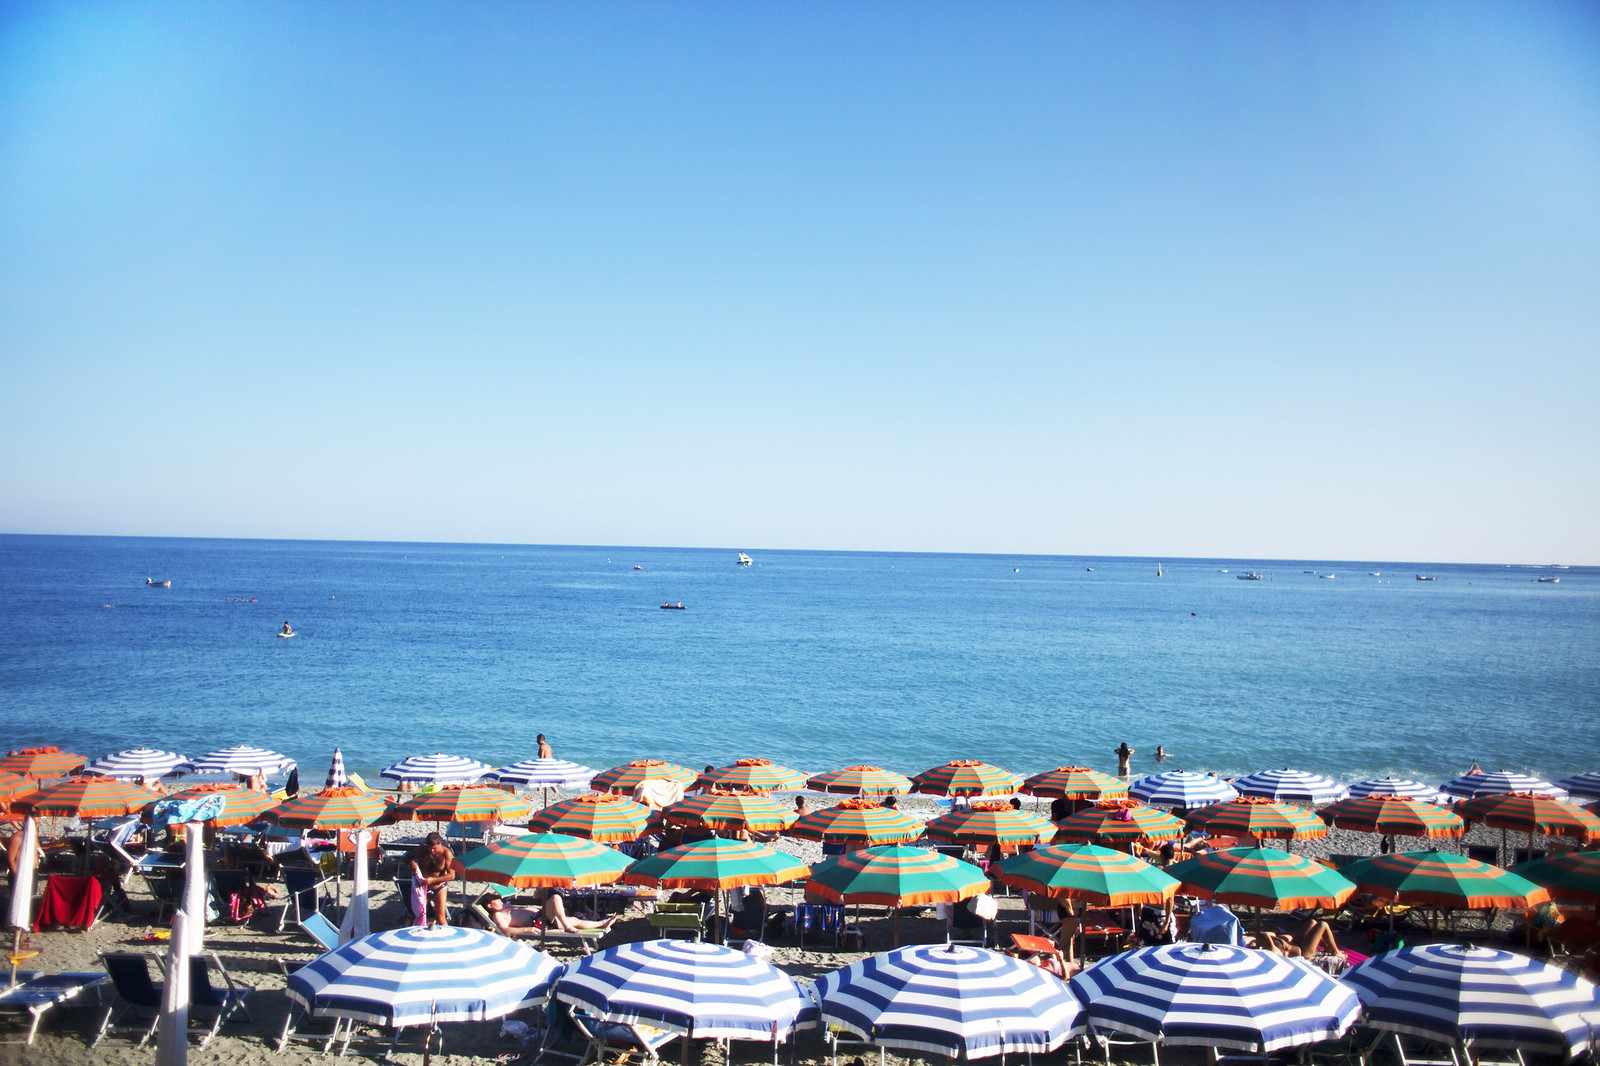 Beach umbrellas in Monterosso, Cinque Terre, Italy